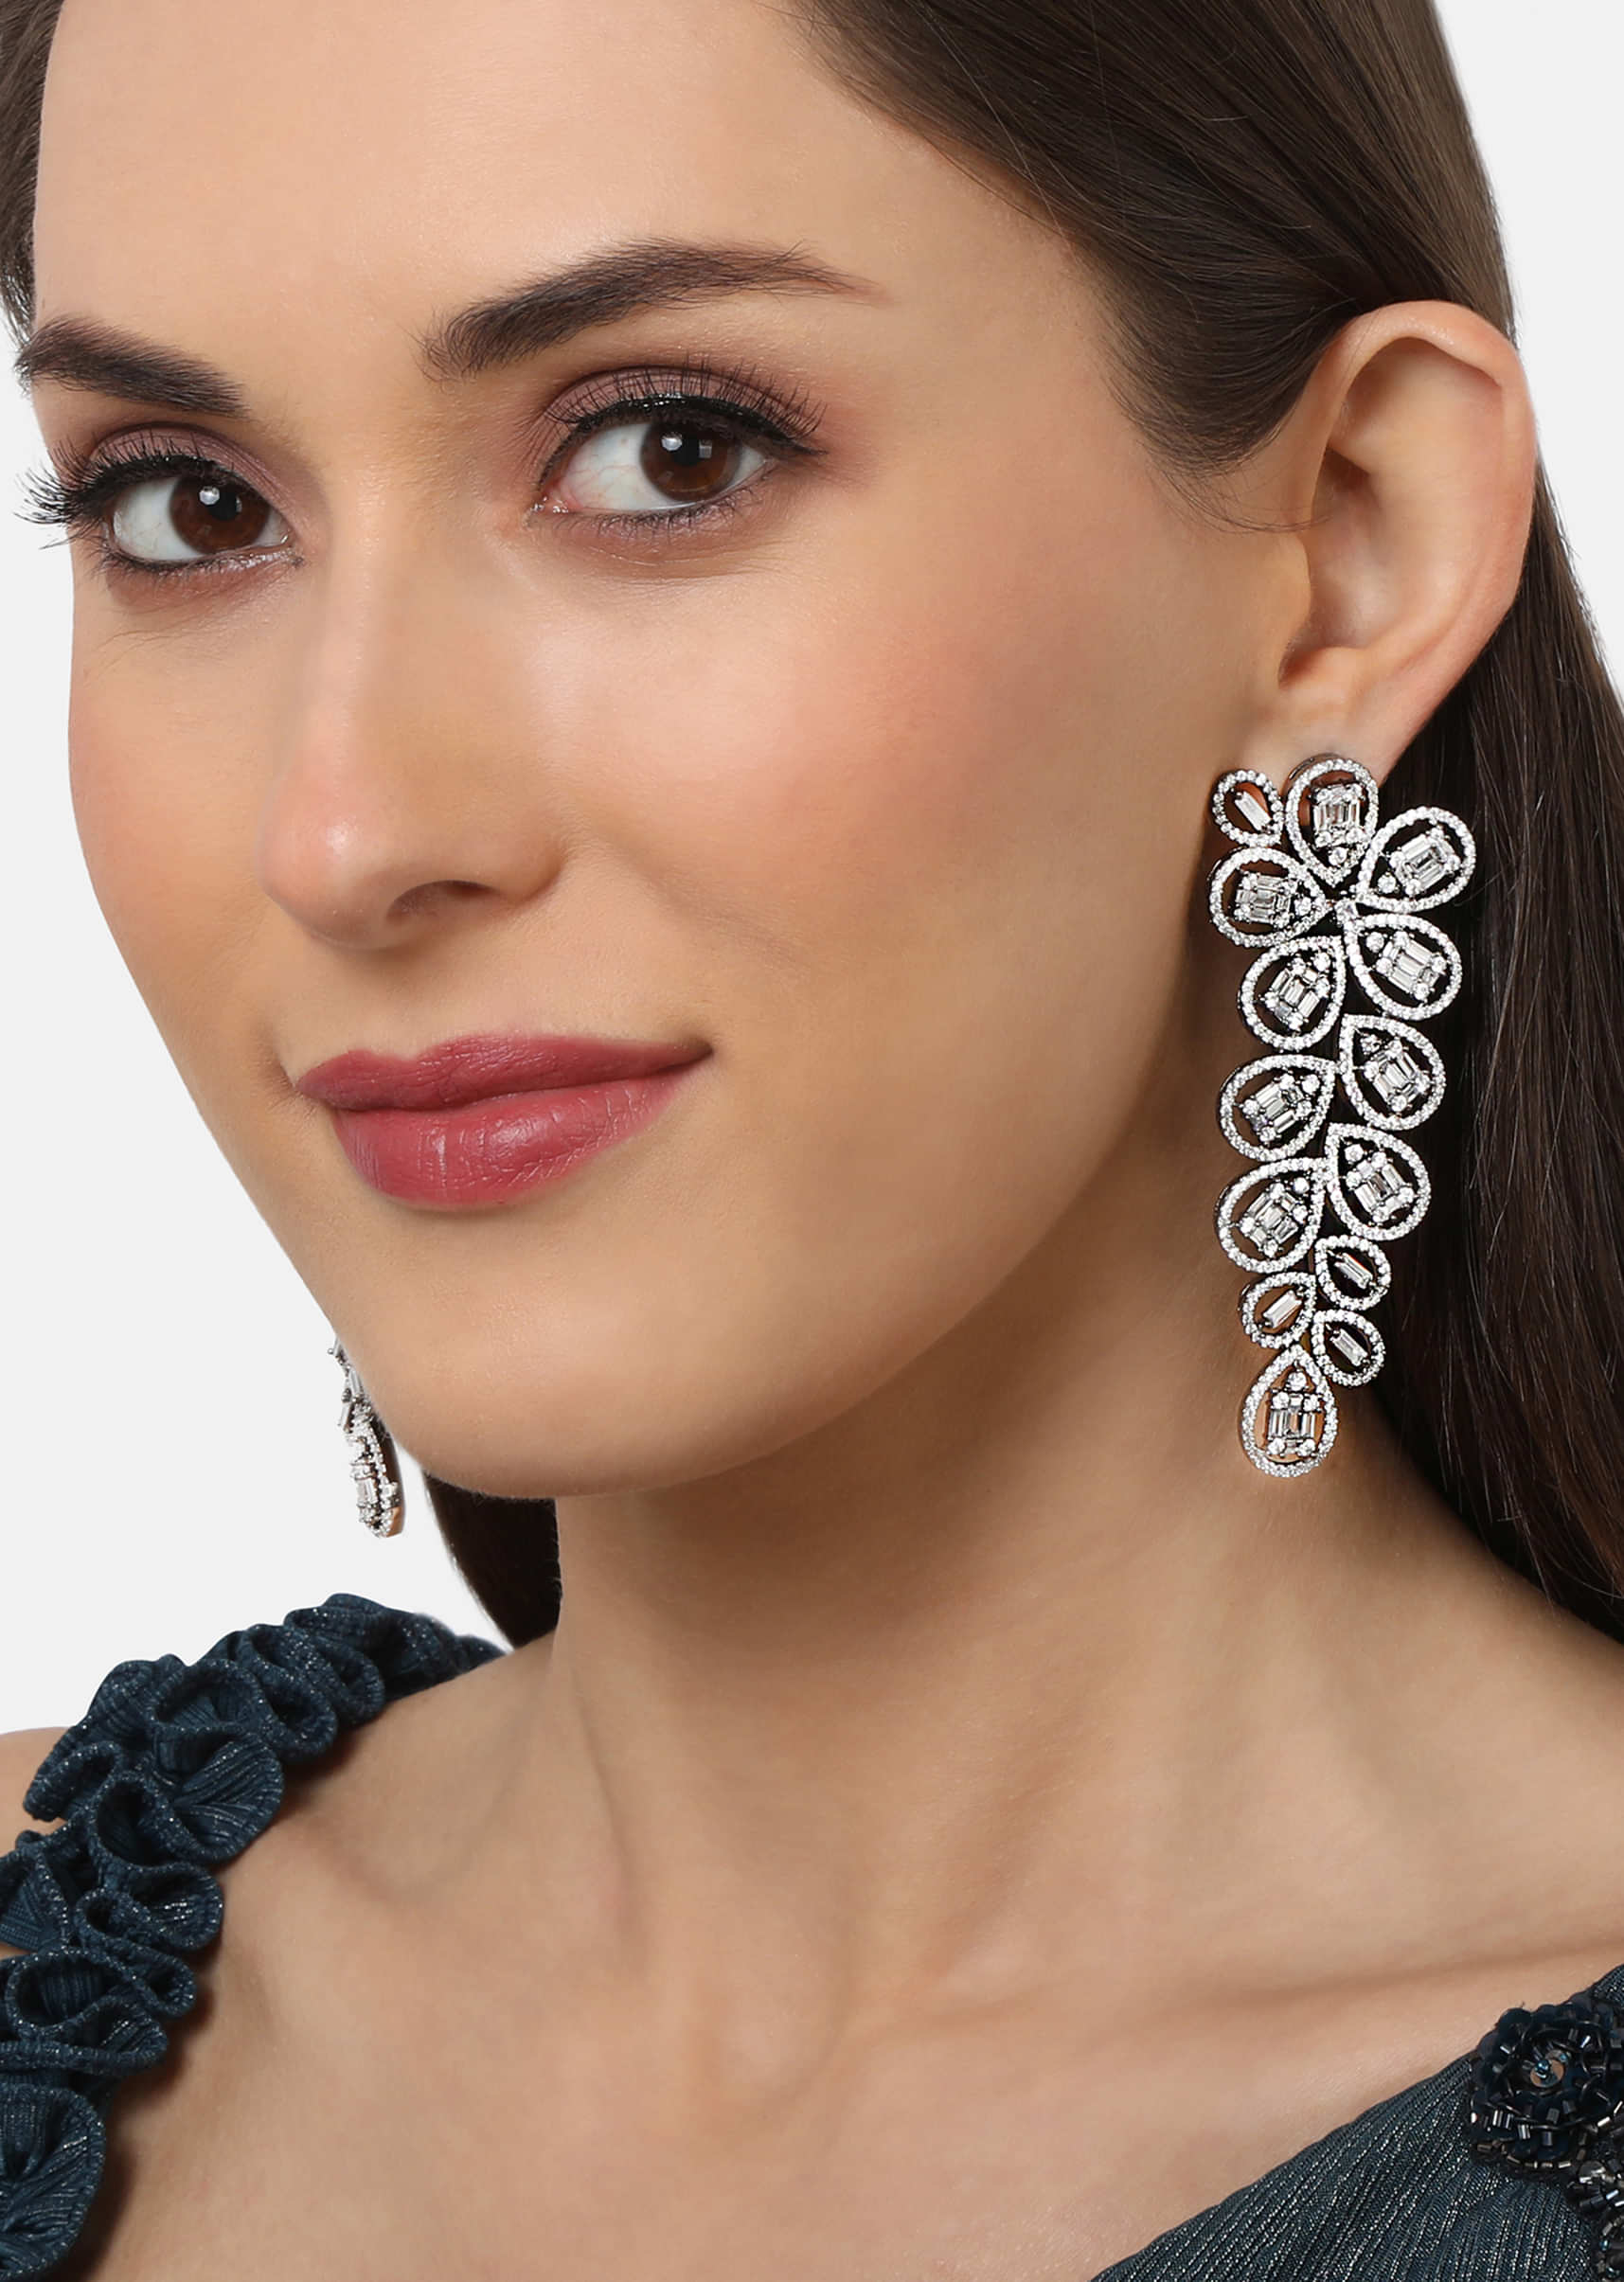 Black Rhodium Finish Earrings With Baguette Shaped Faux Diamonds In Pear Motifs By Tizora